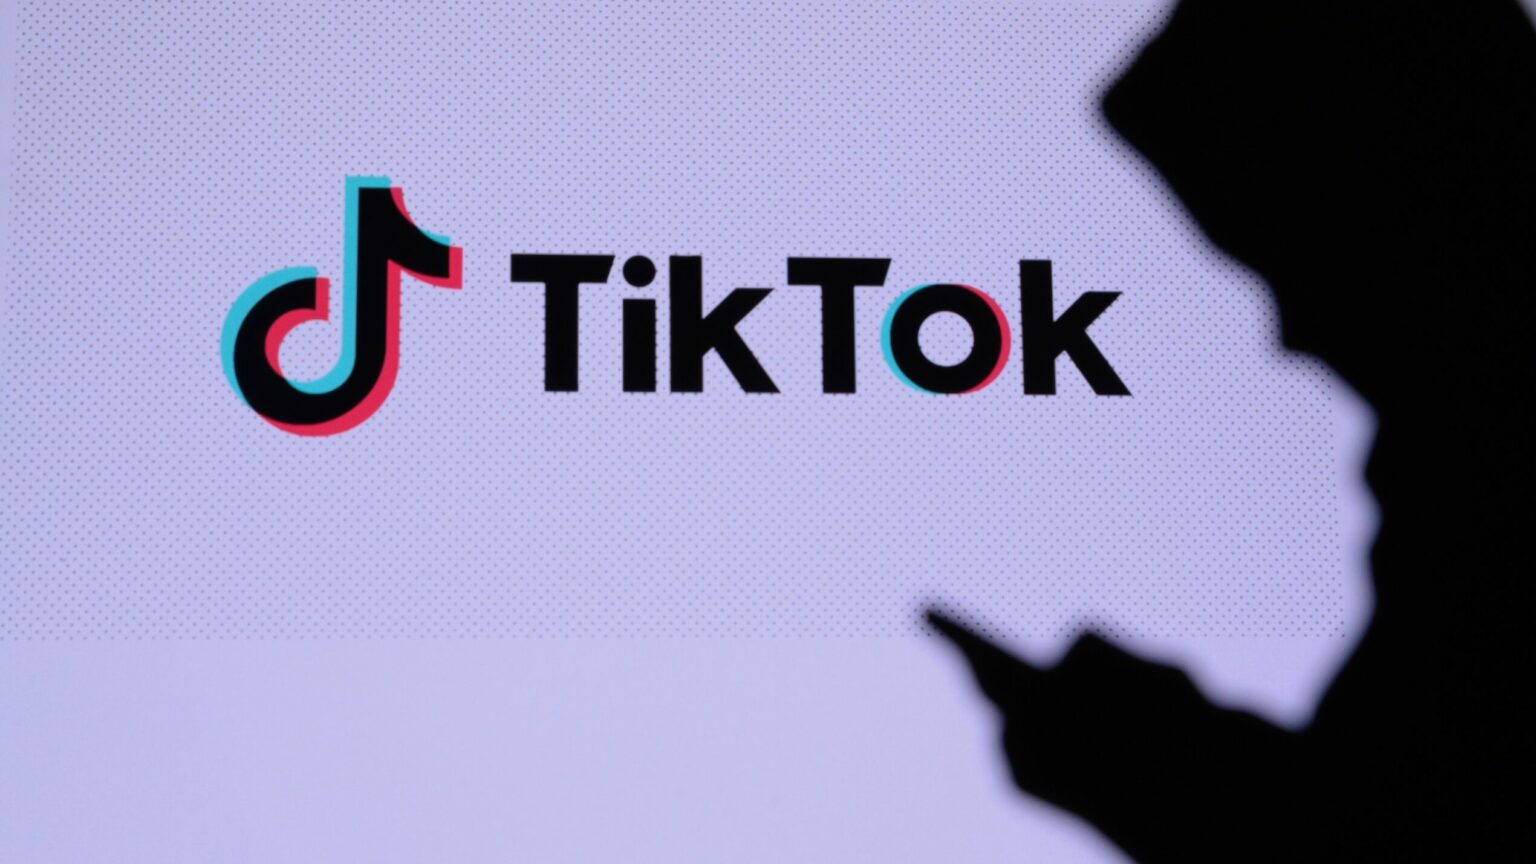 TikTok Reportedly Manipulated Own Algorithm to Promote Certain Landmarks